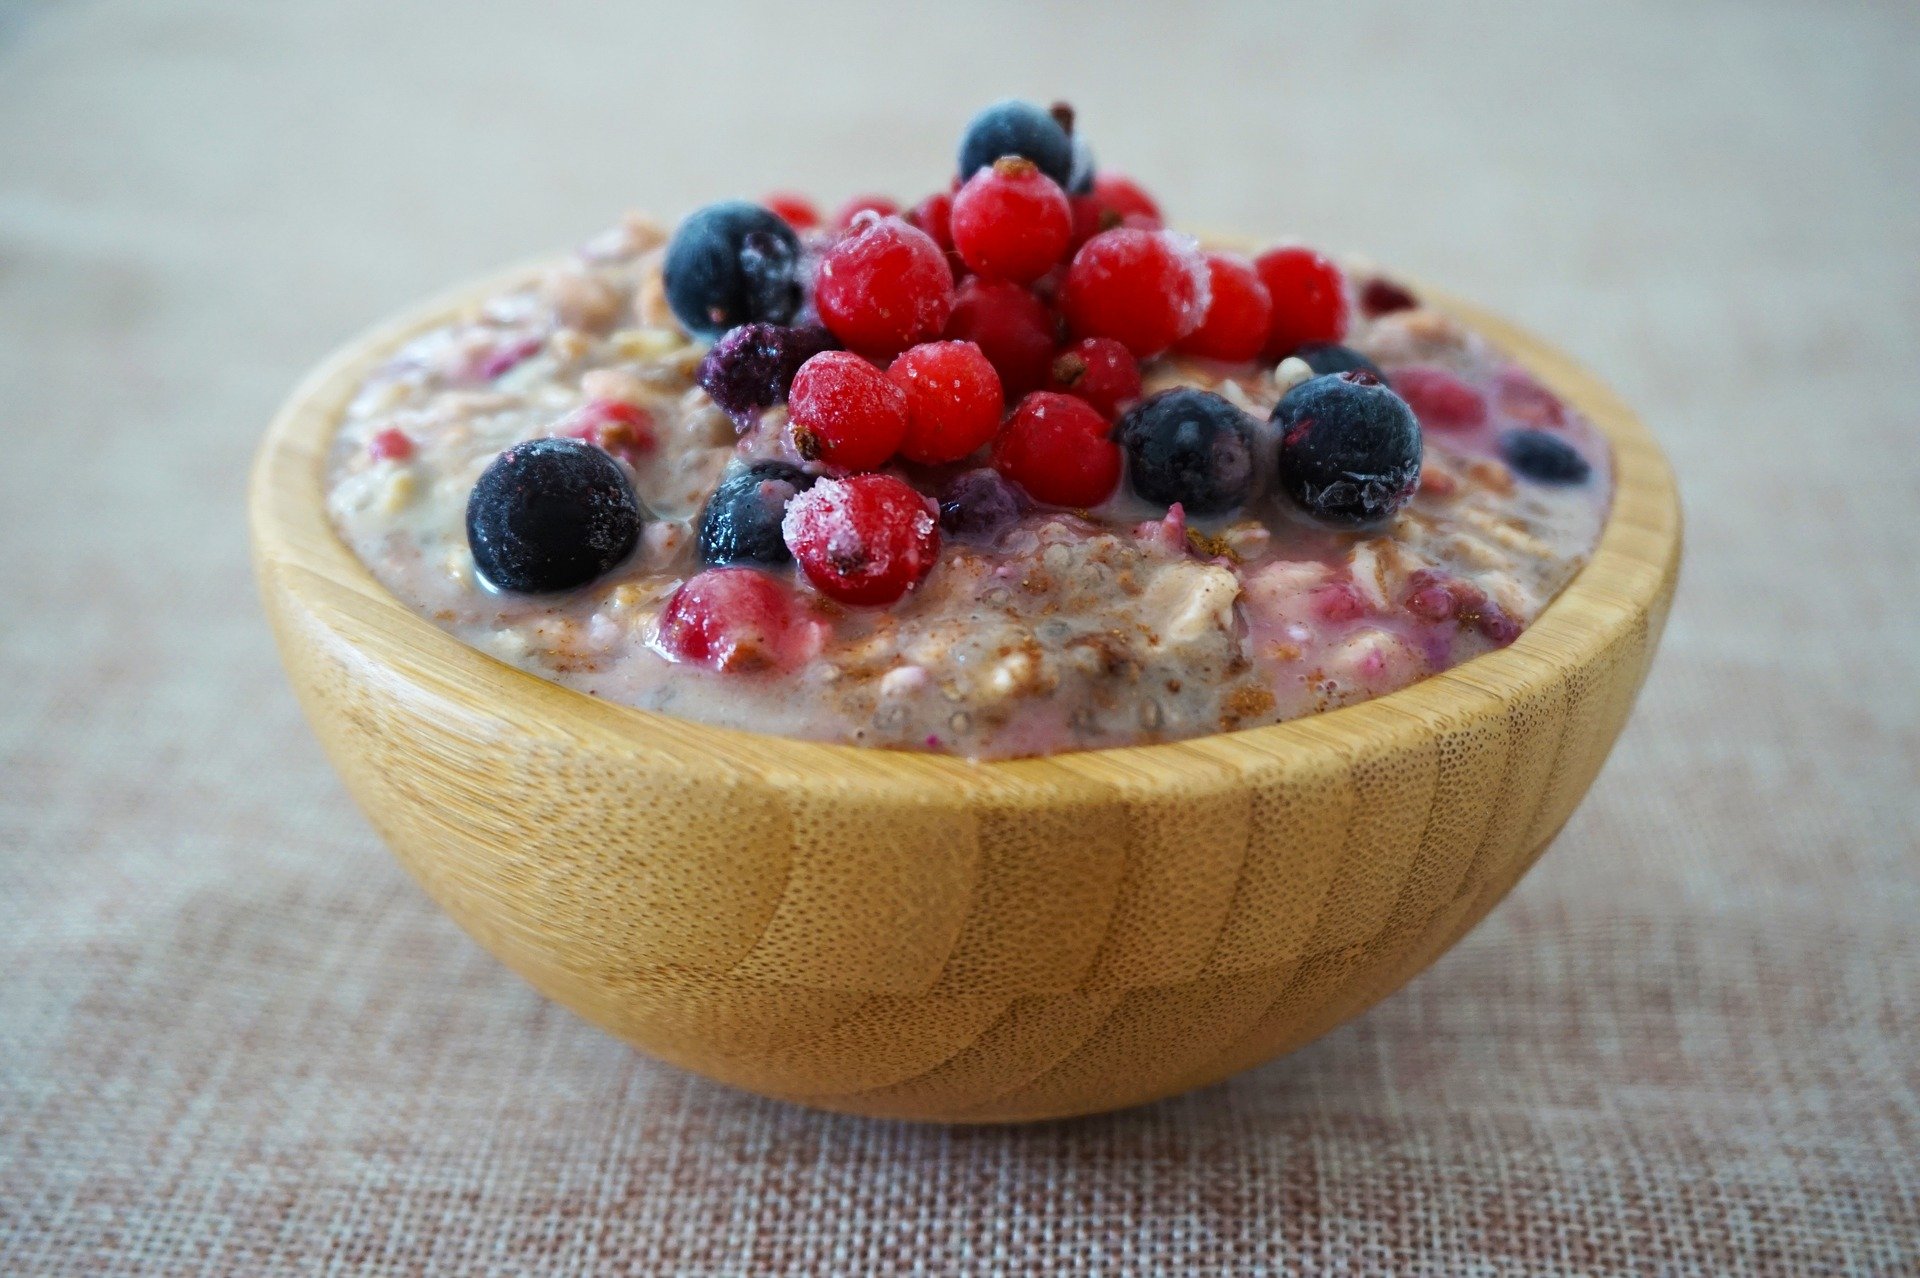 Easy Weigh Porridge with Berries